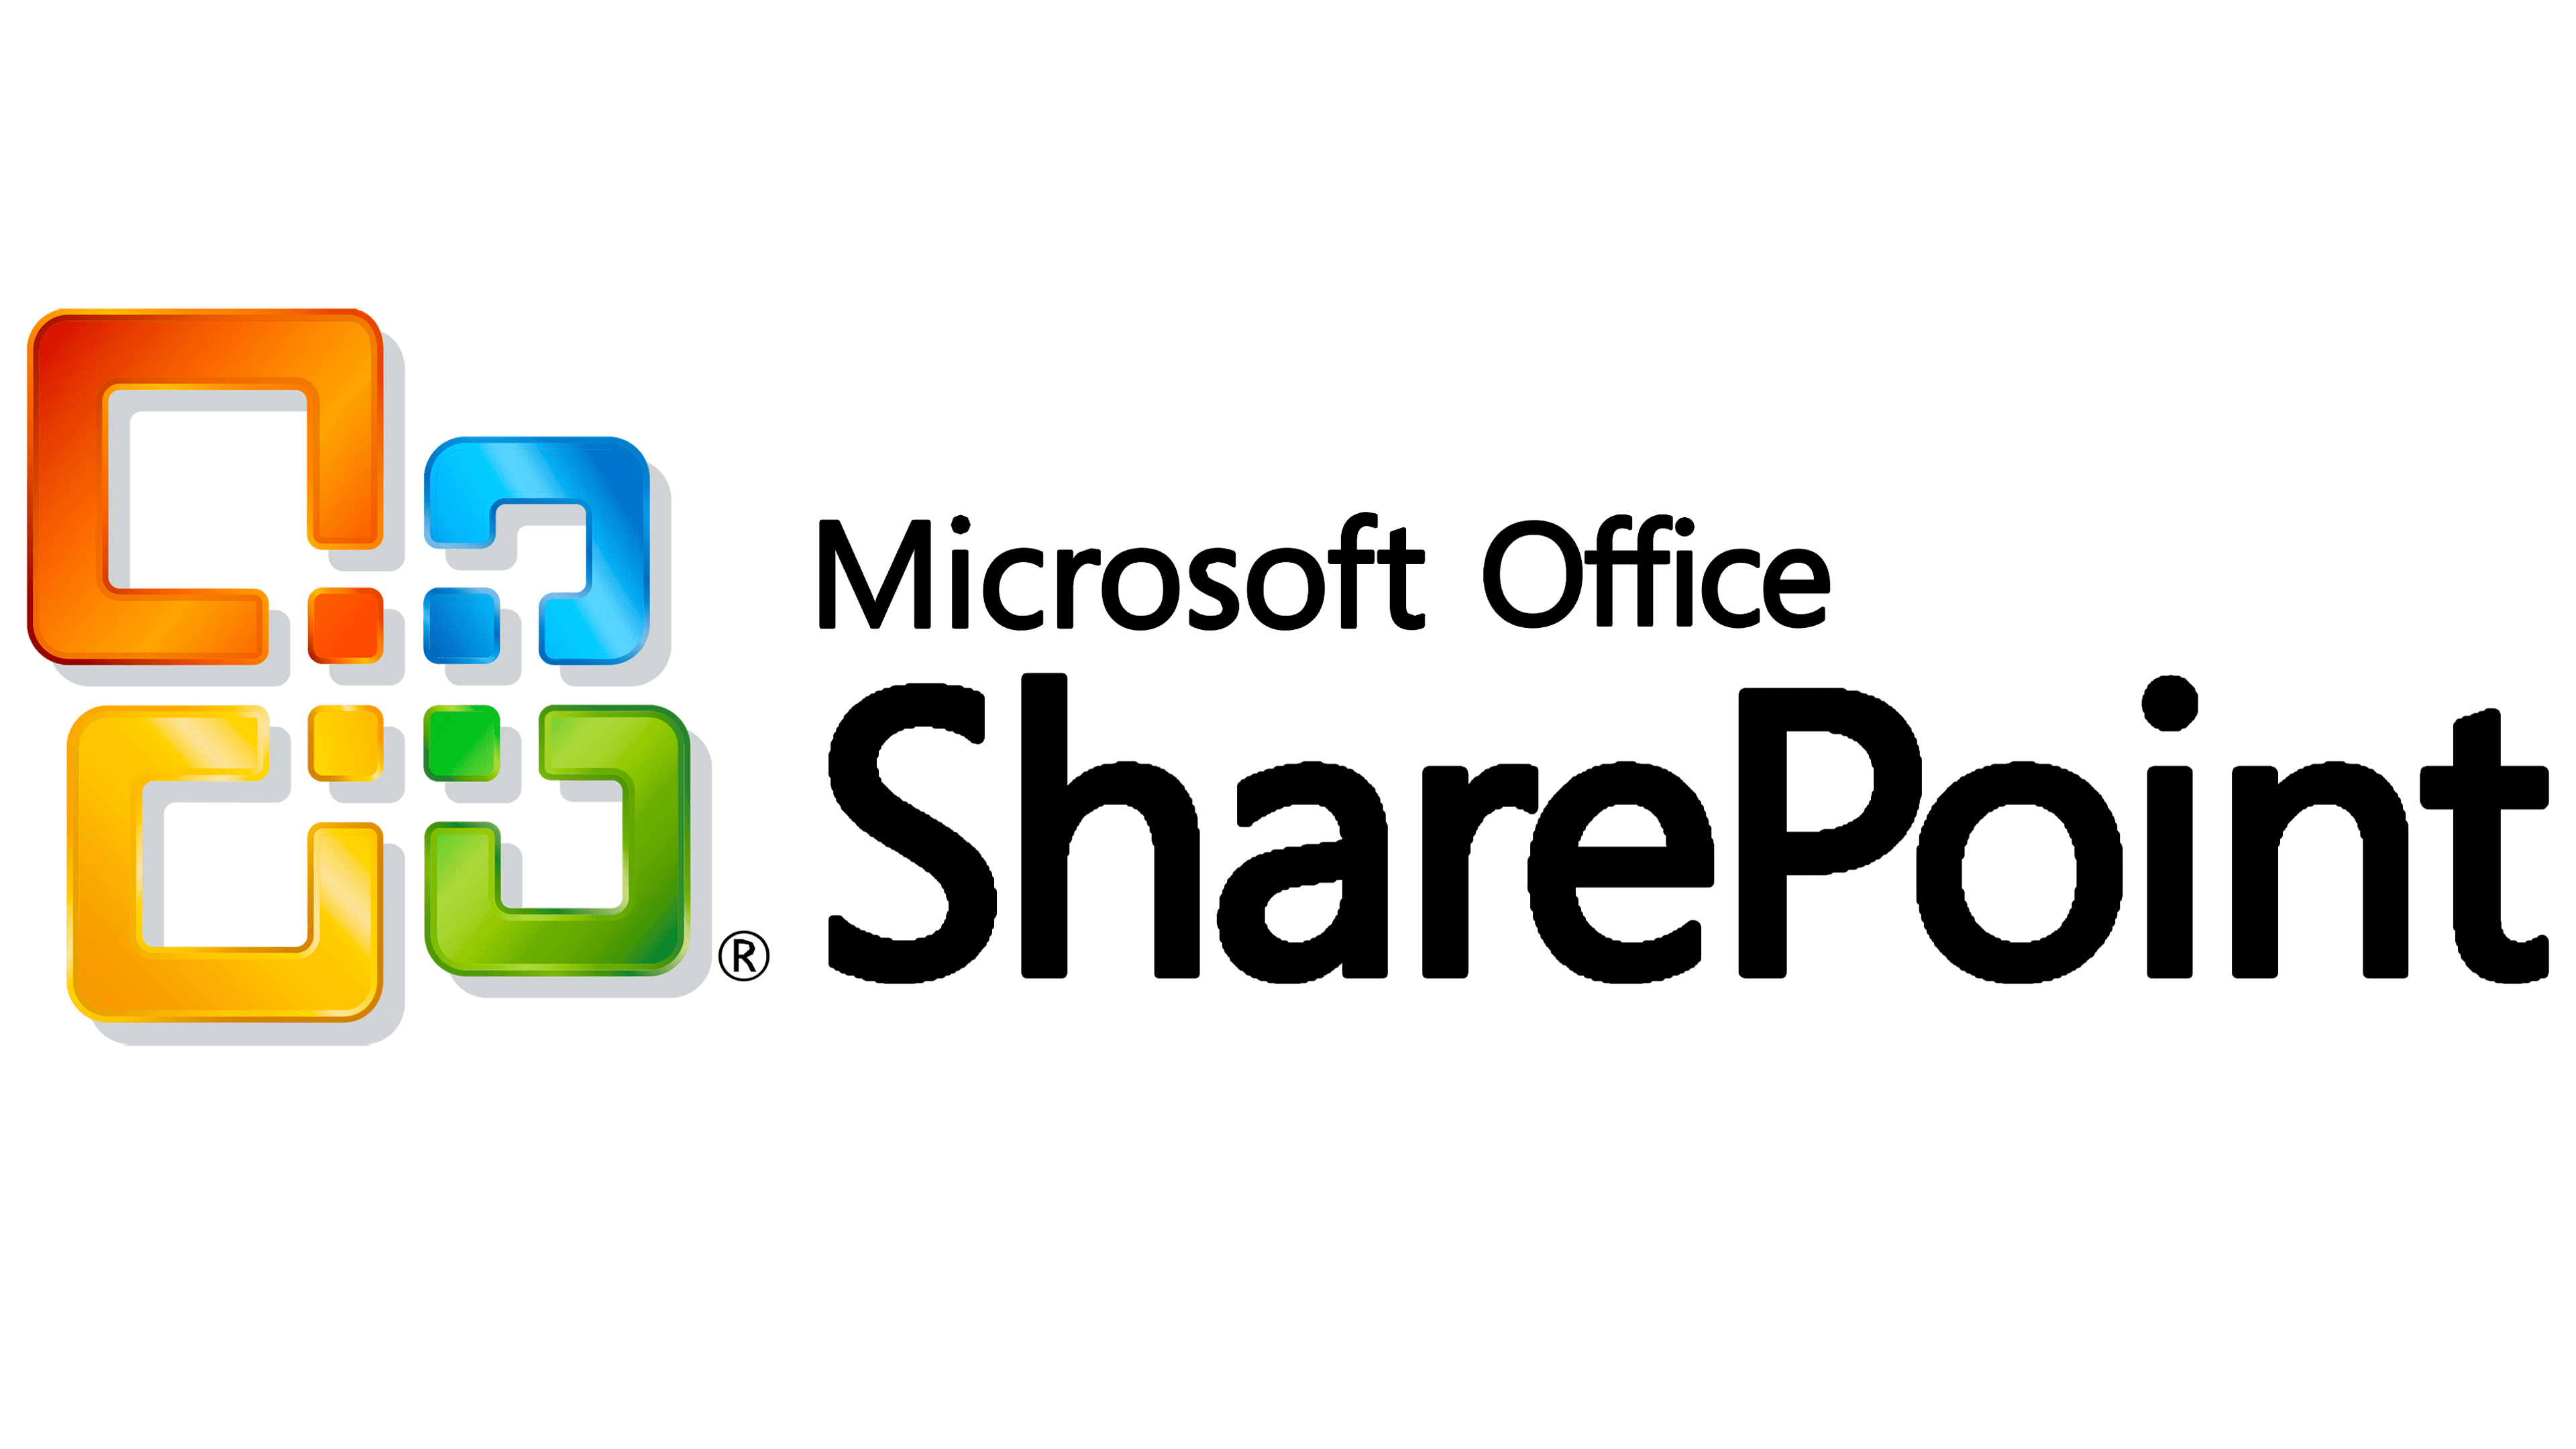 microsoft sharepoint 2010 logo